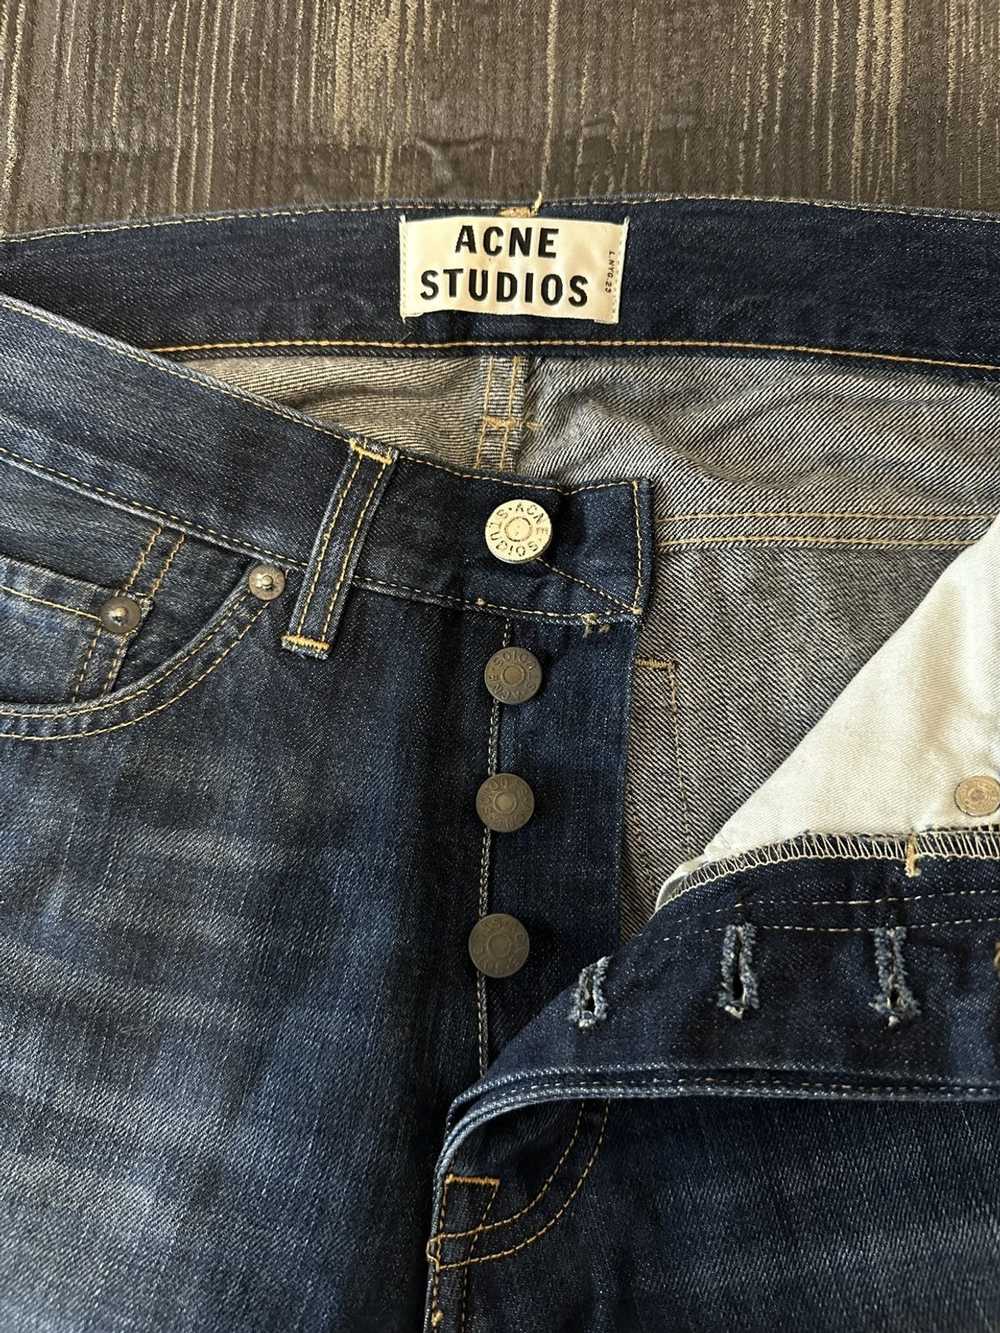 Acne Studios Acne Studios Slim Fit Jeans (29x32) - image 6